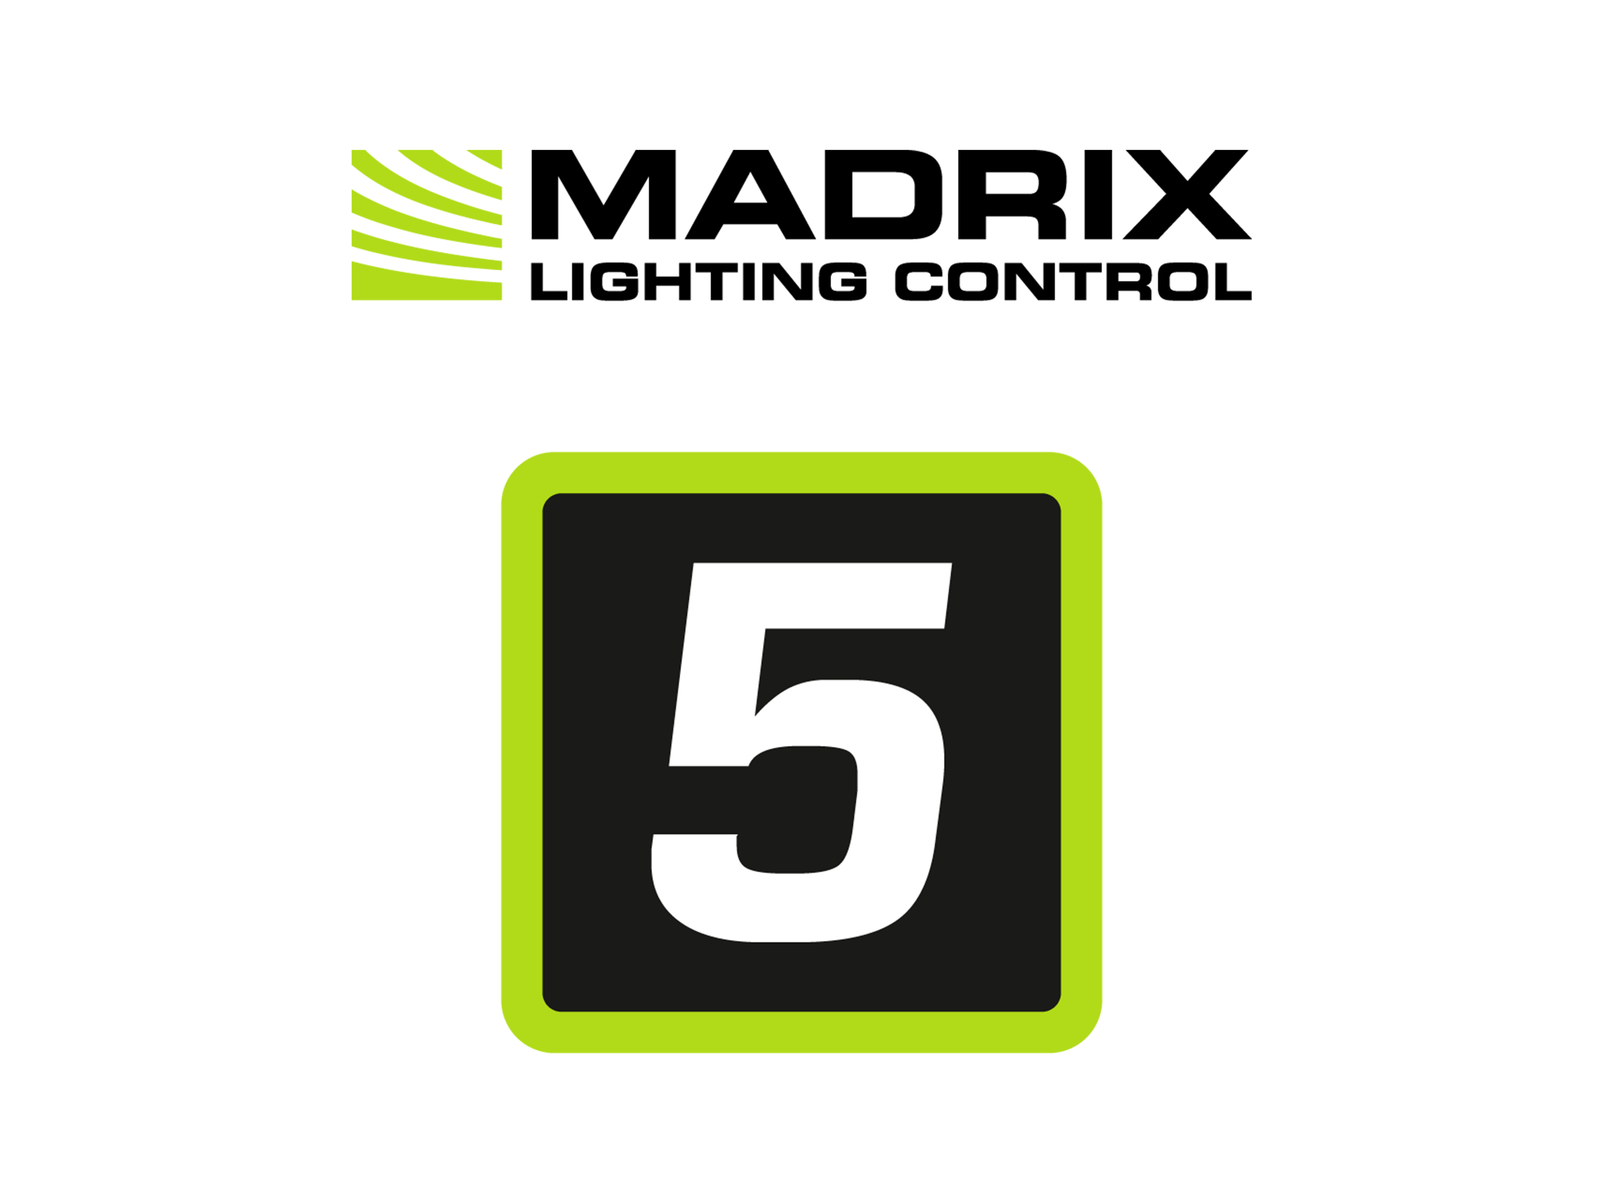 MADRIX Software 5 Lizenz ultimate